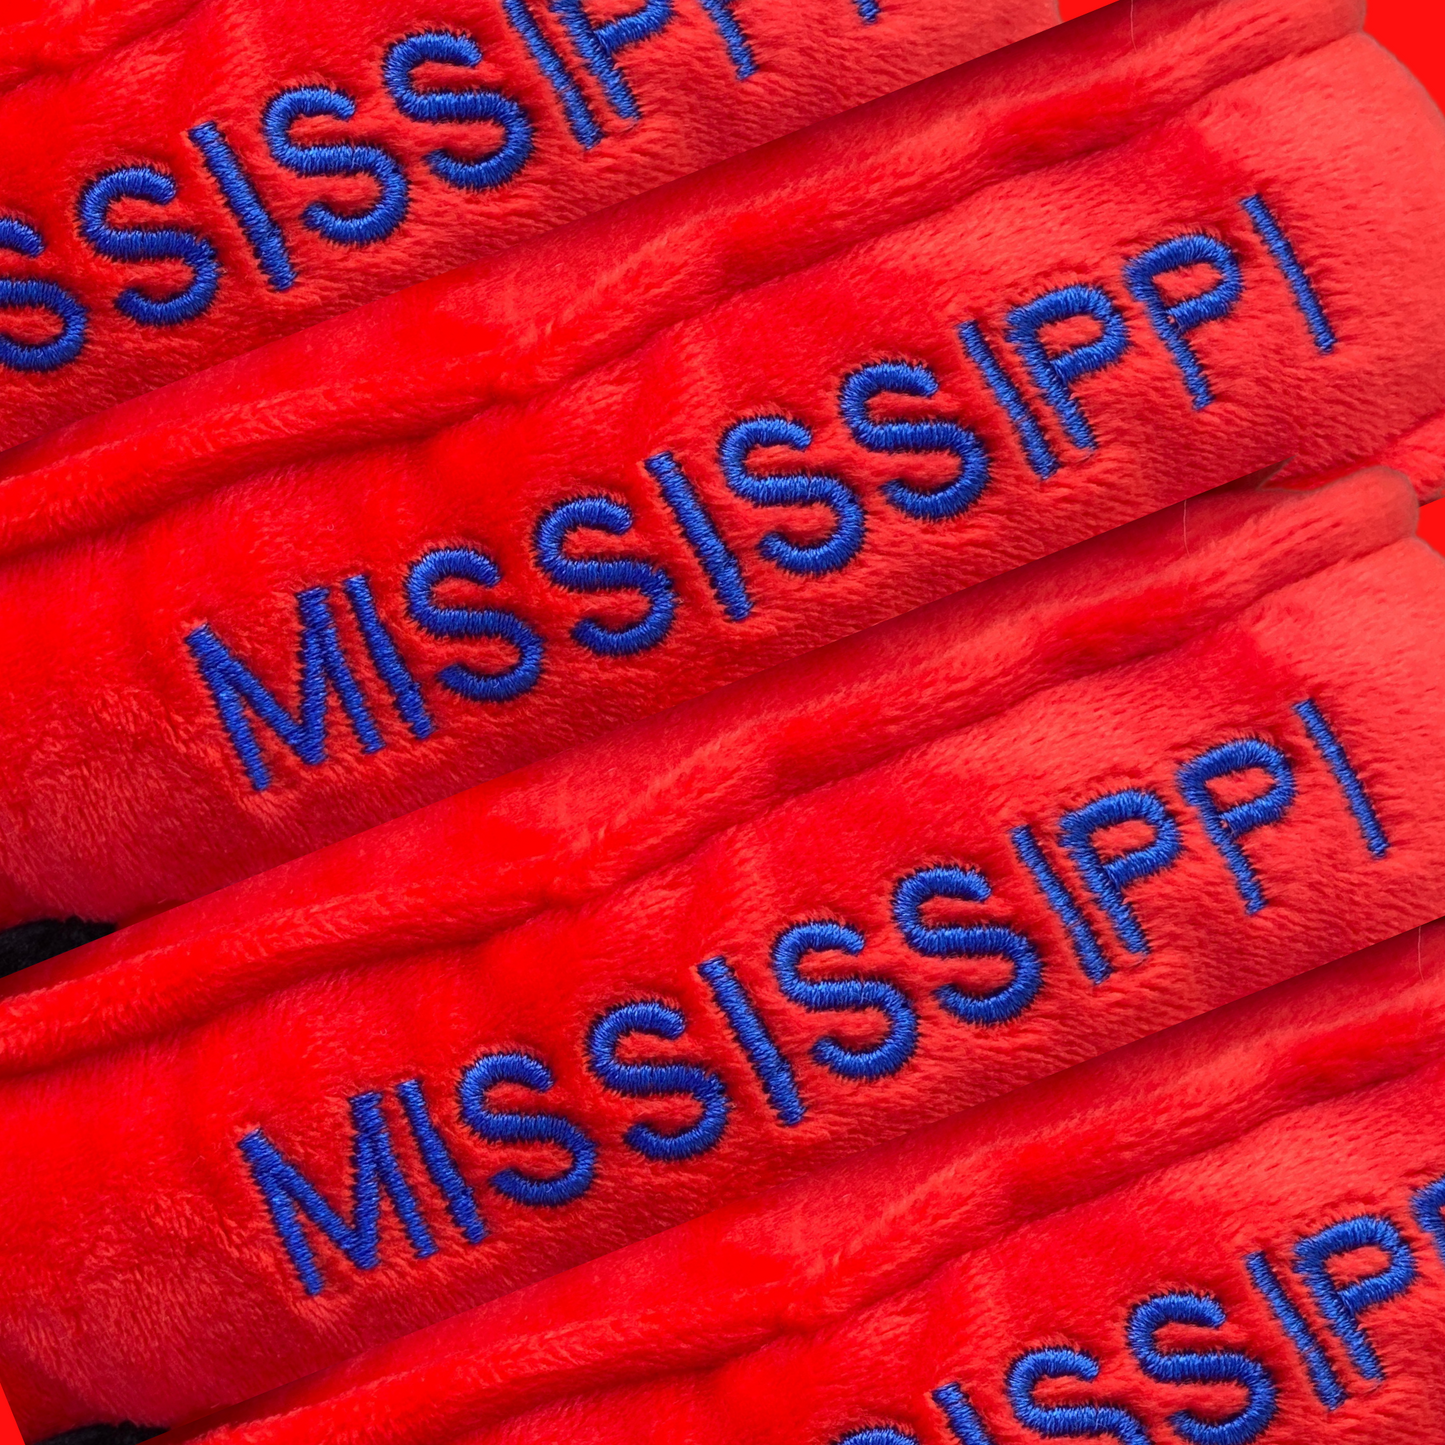 Mississippi State Stuffed Plush